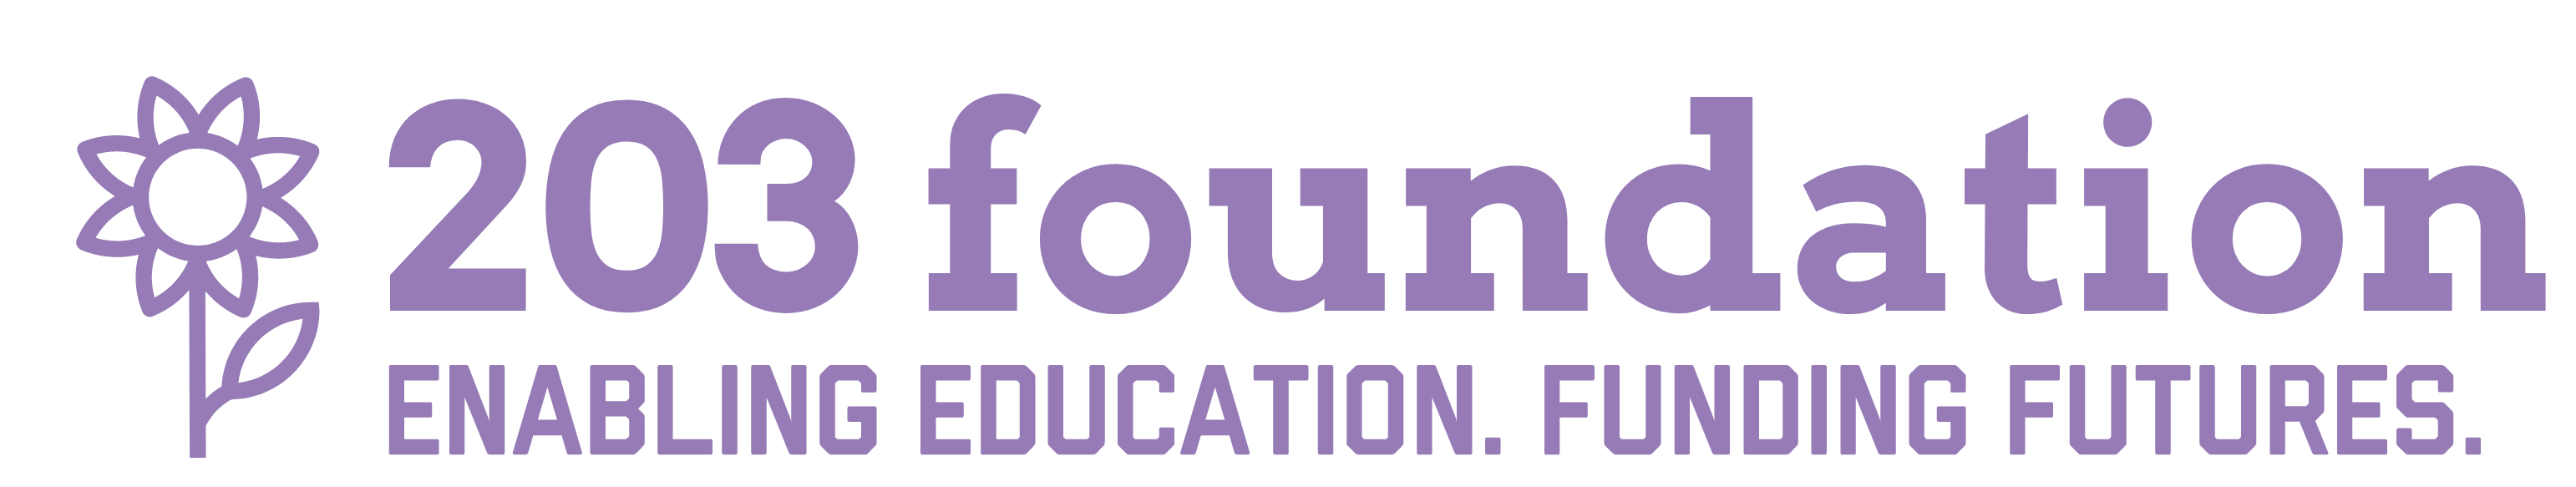 203 Foundation logo